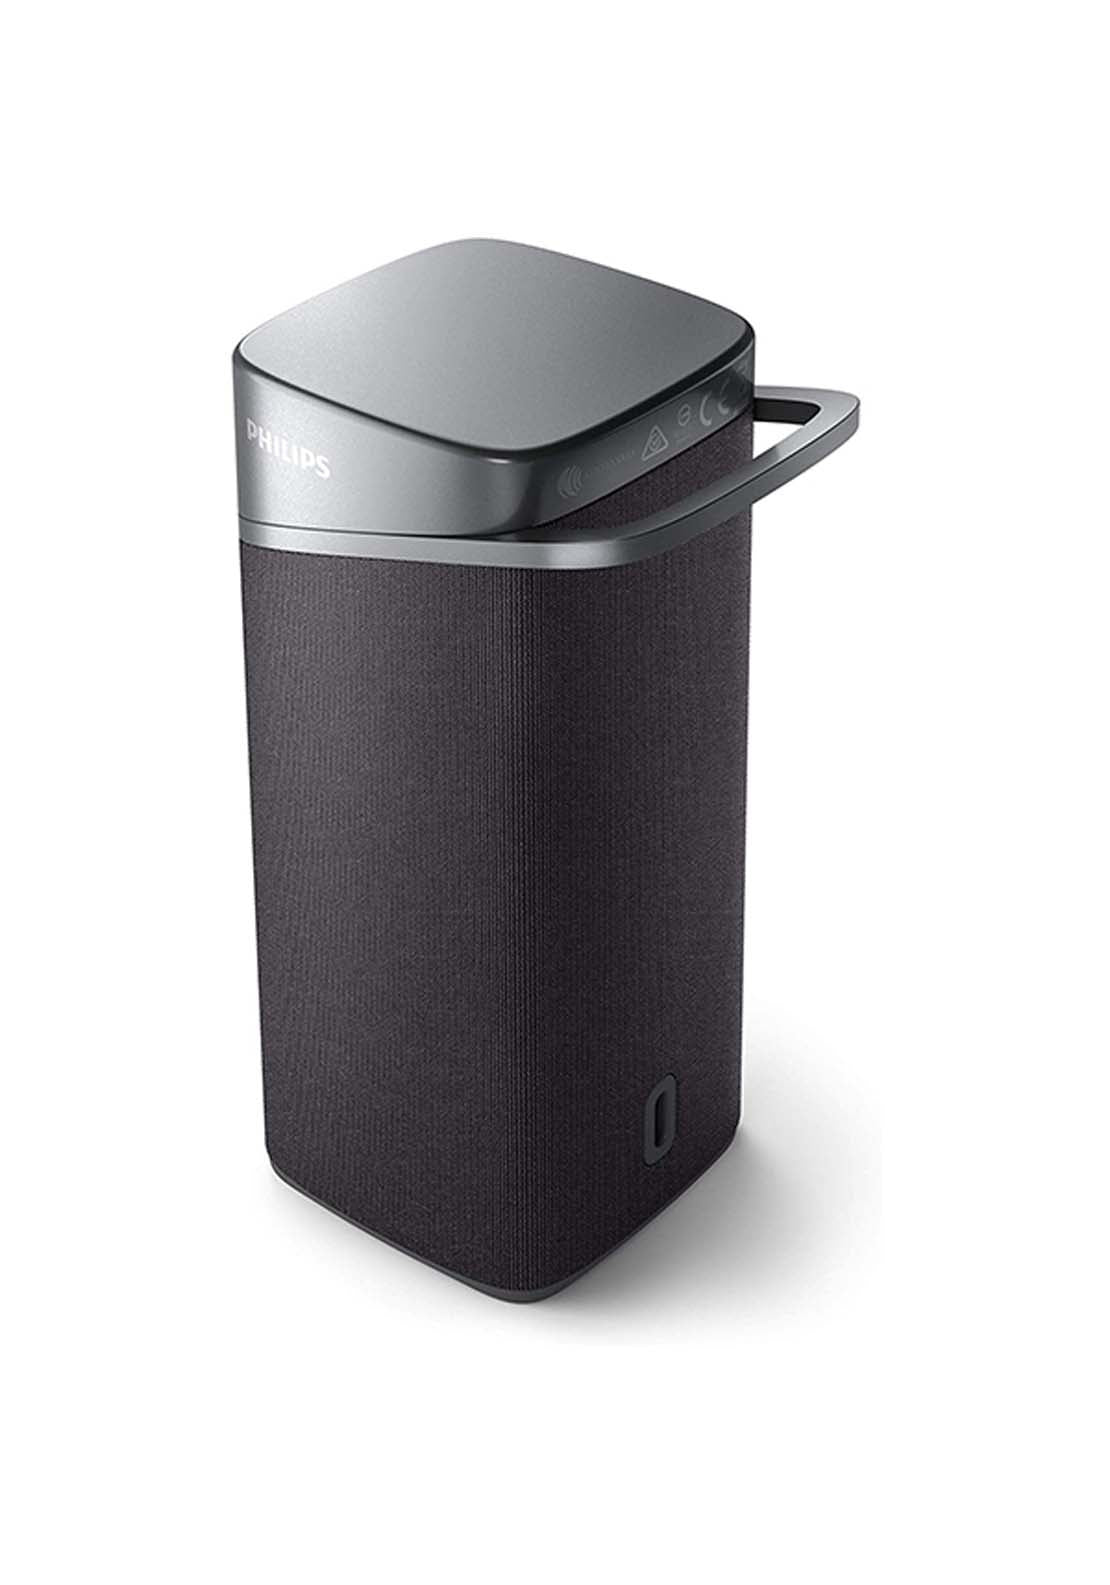 Philips Bluetooth Speaker | Tas350500 3 Shaws Department Stores